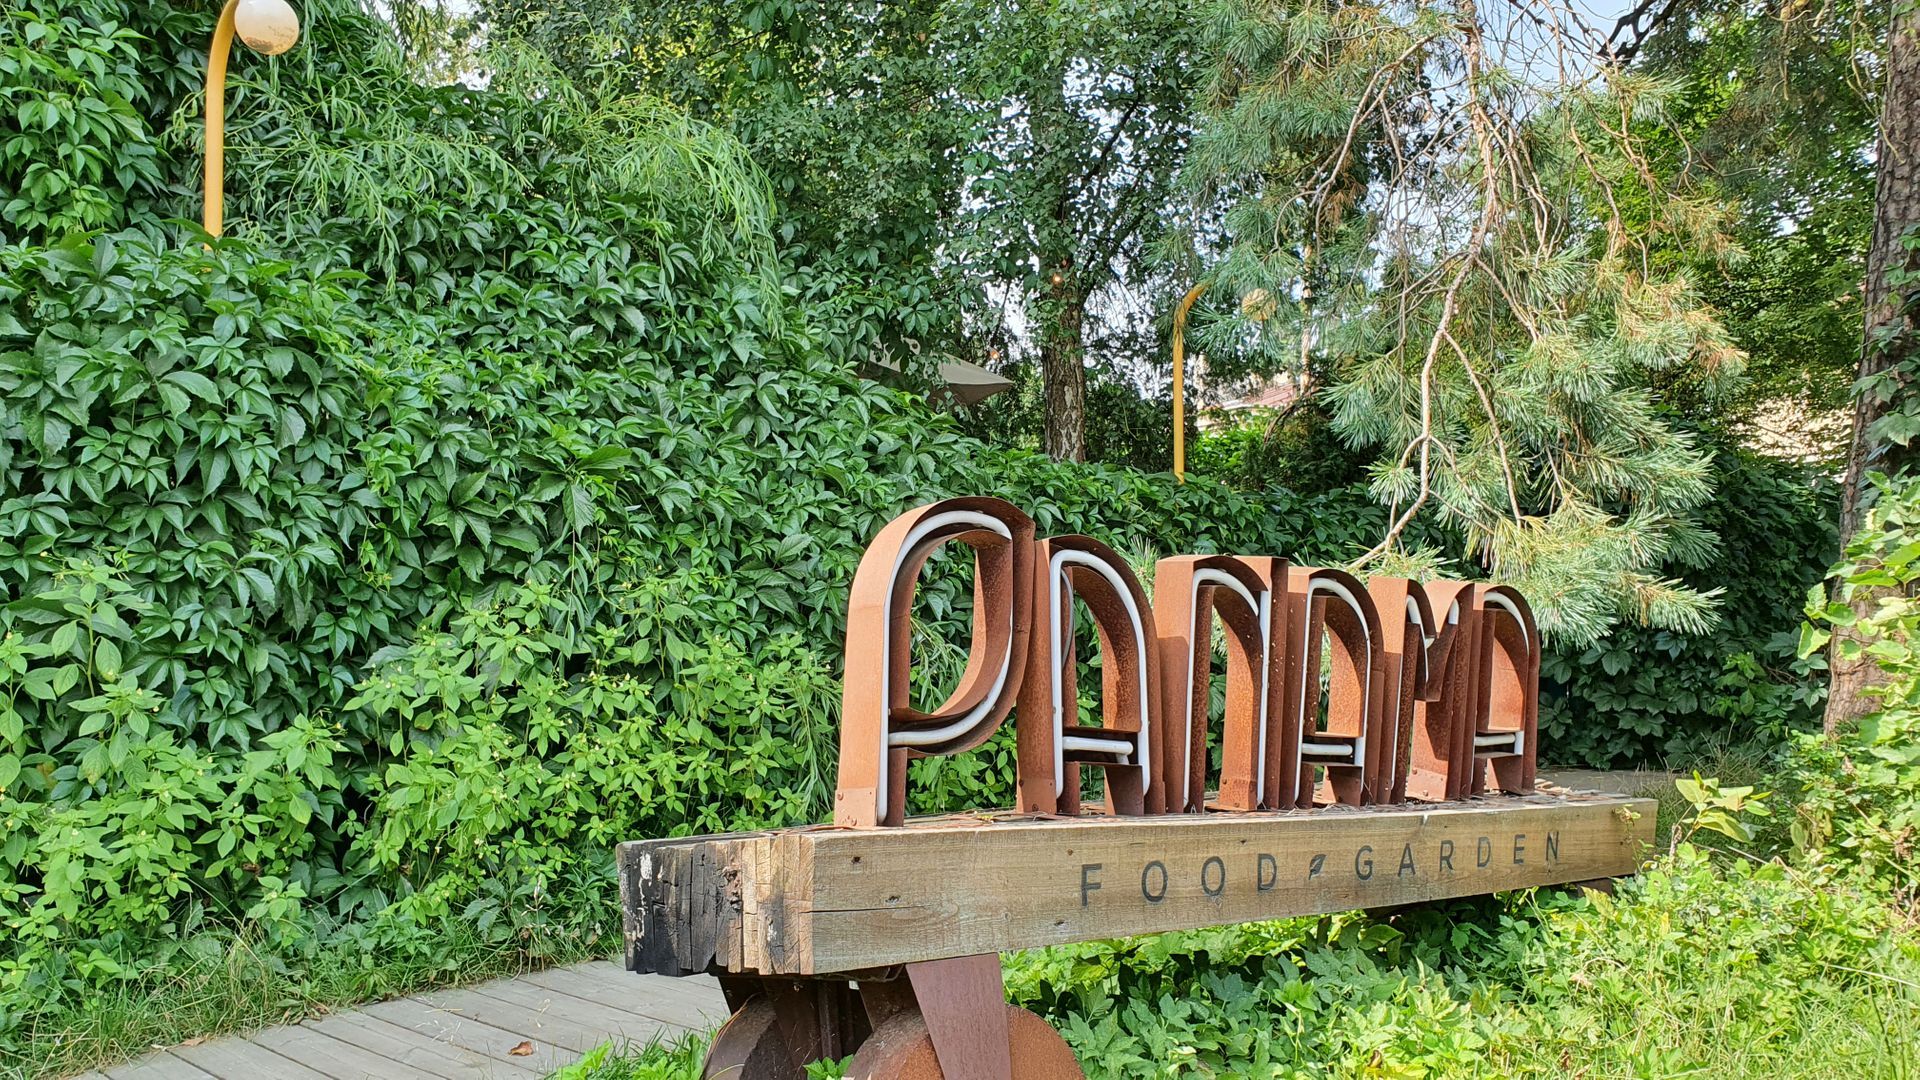 Panama Food Garden